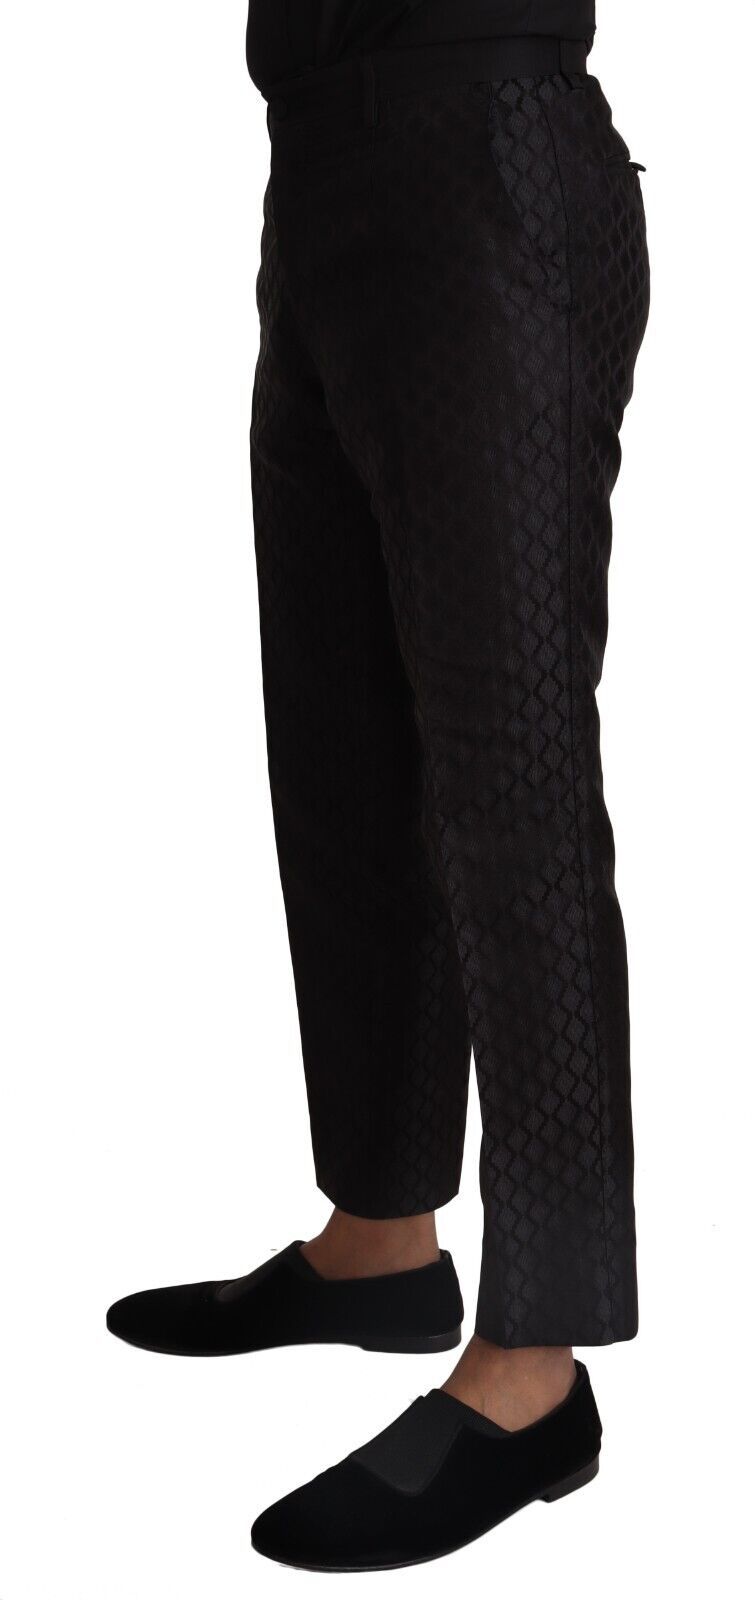 Elegant Black Silk Two-Piece Suit